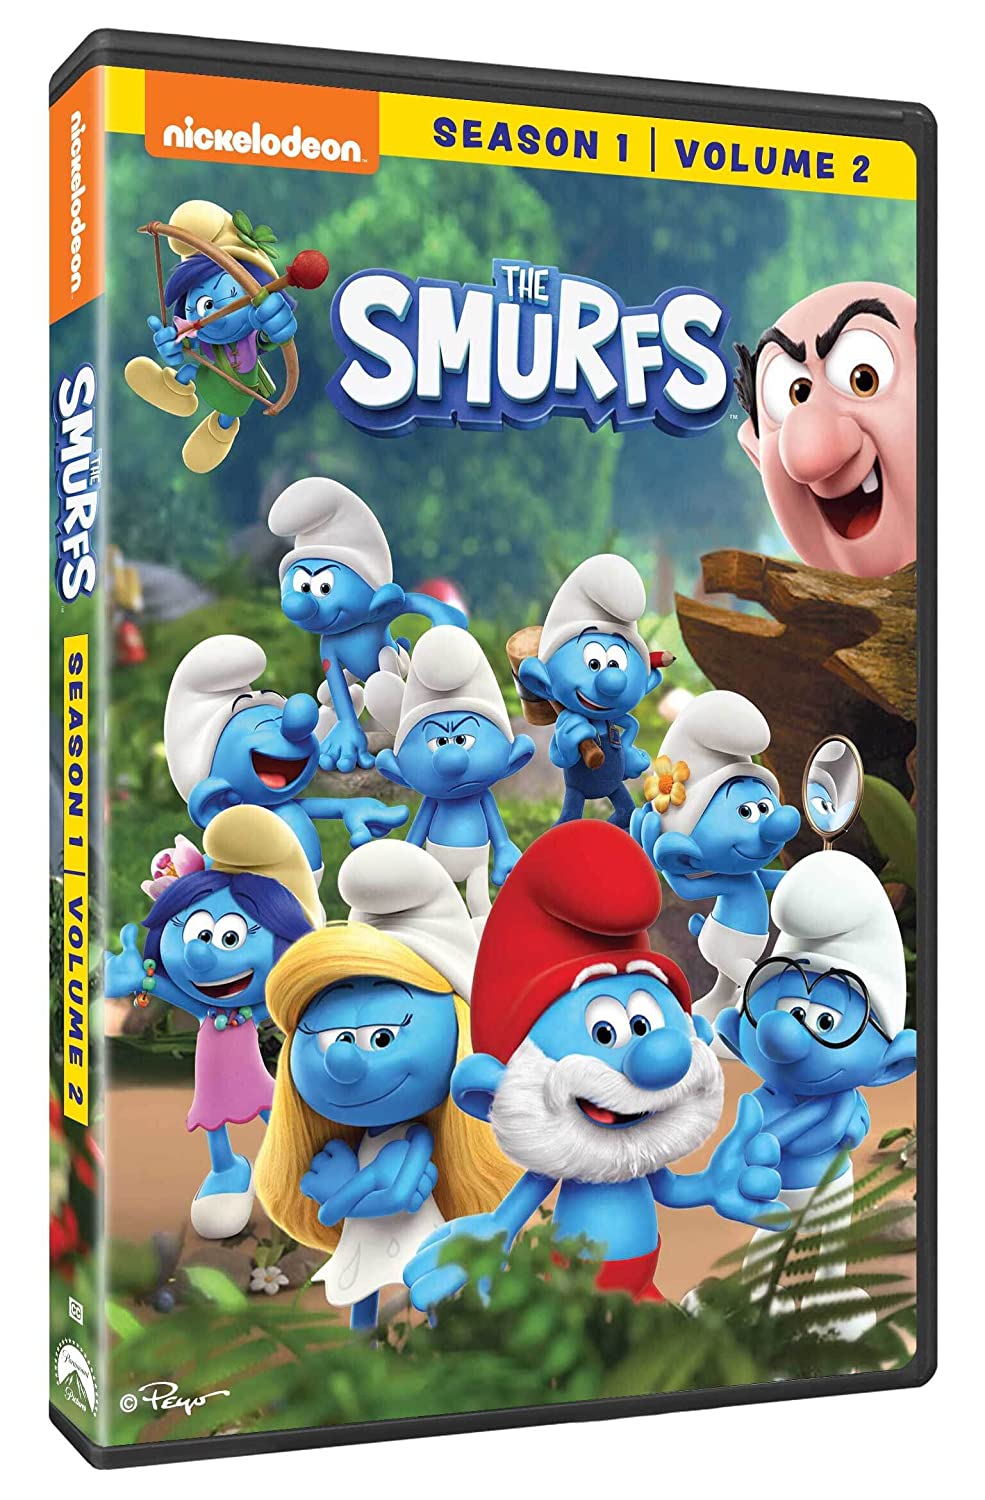 the smurfs season 1, volume 2